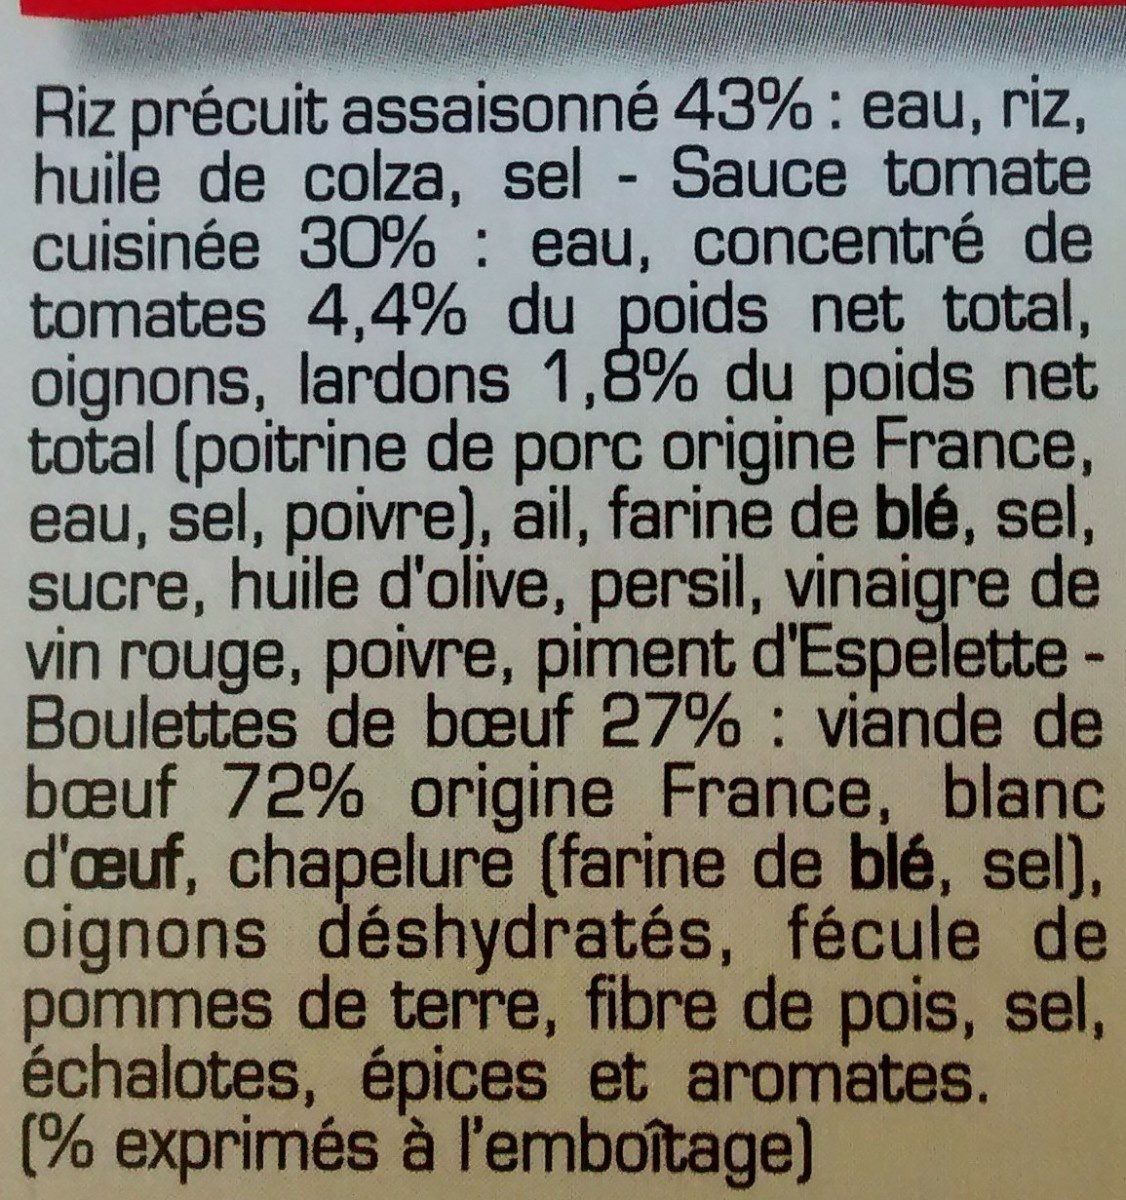 Boulettes pur boeuf, sauce tomate riz lardons - Ingredients - fr